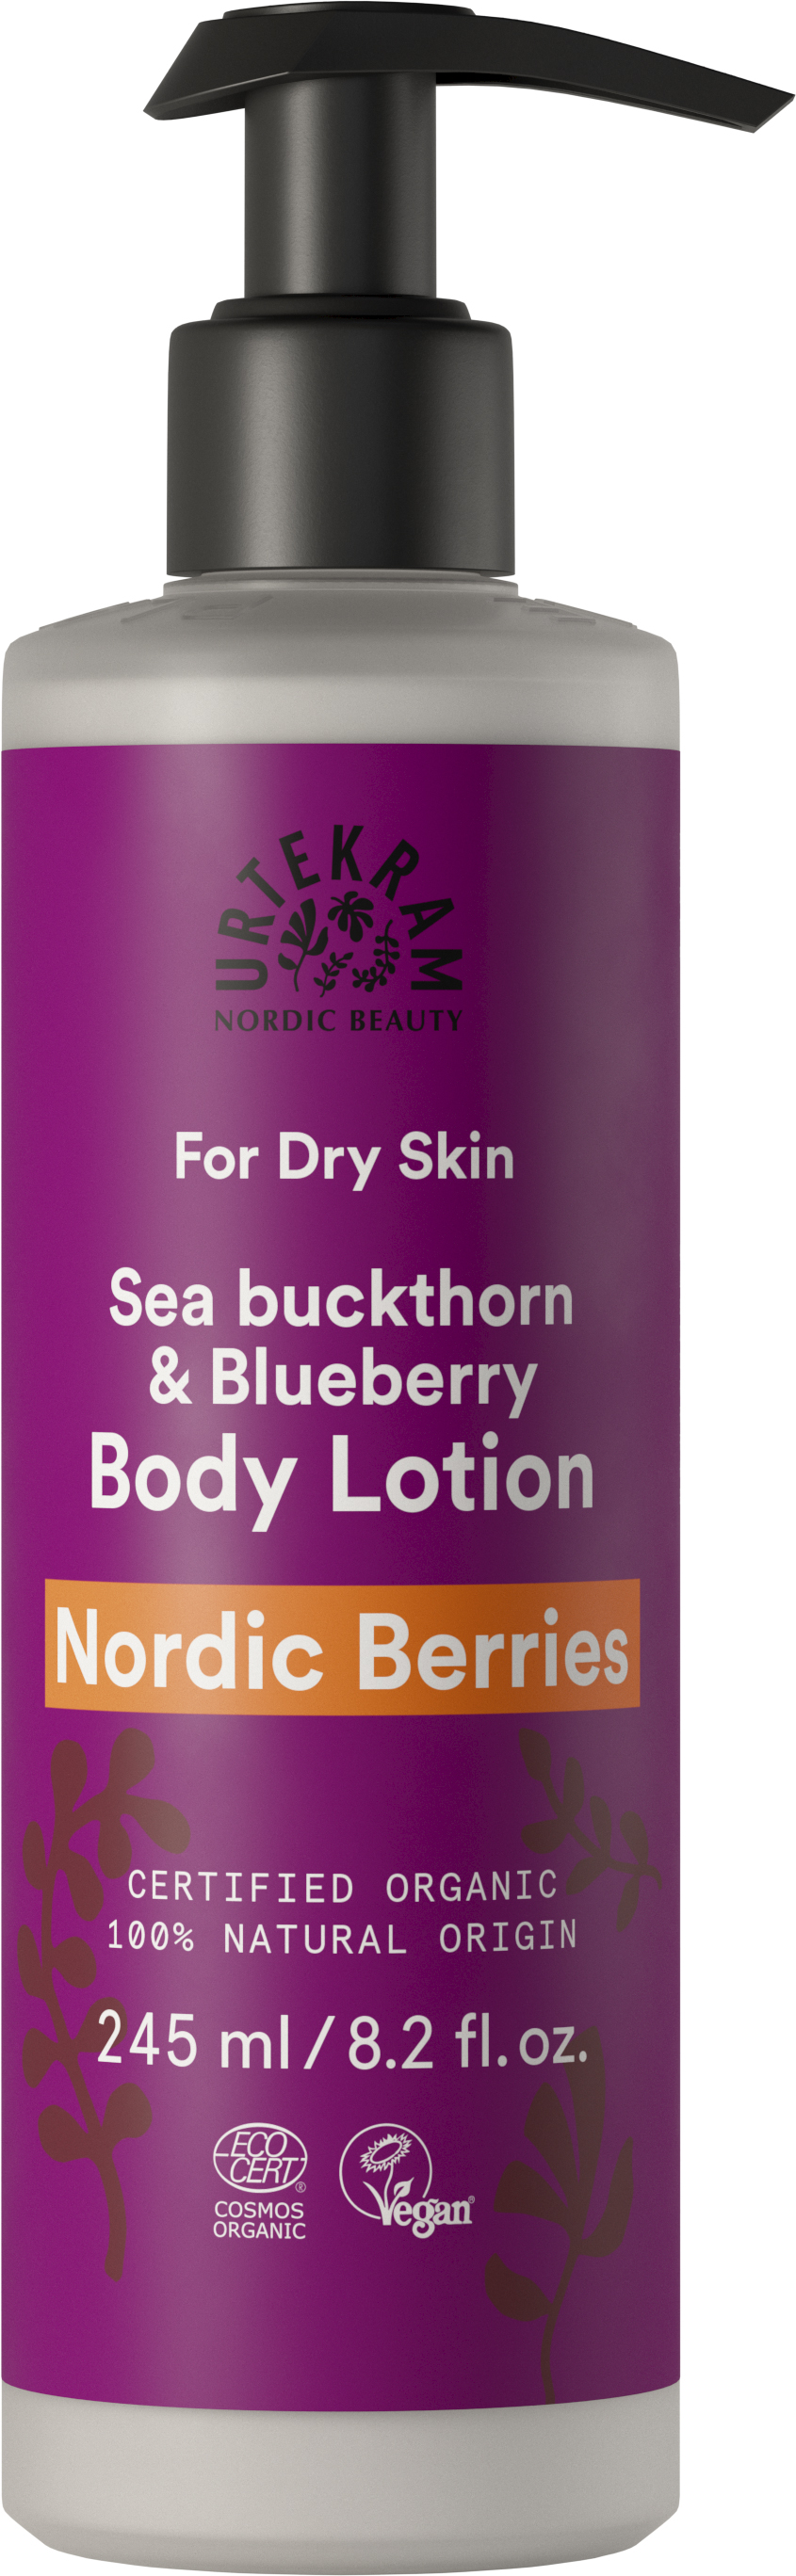 Nordic Berries Body Lotion - Urtekram